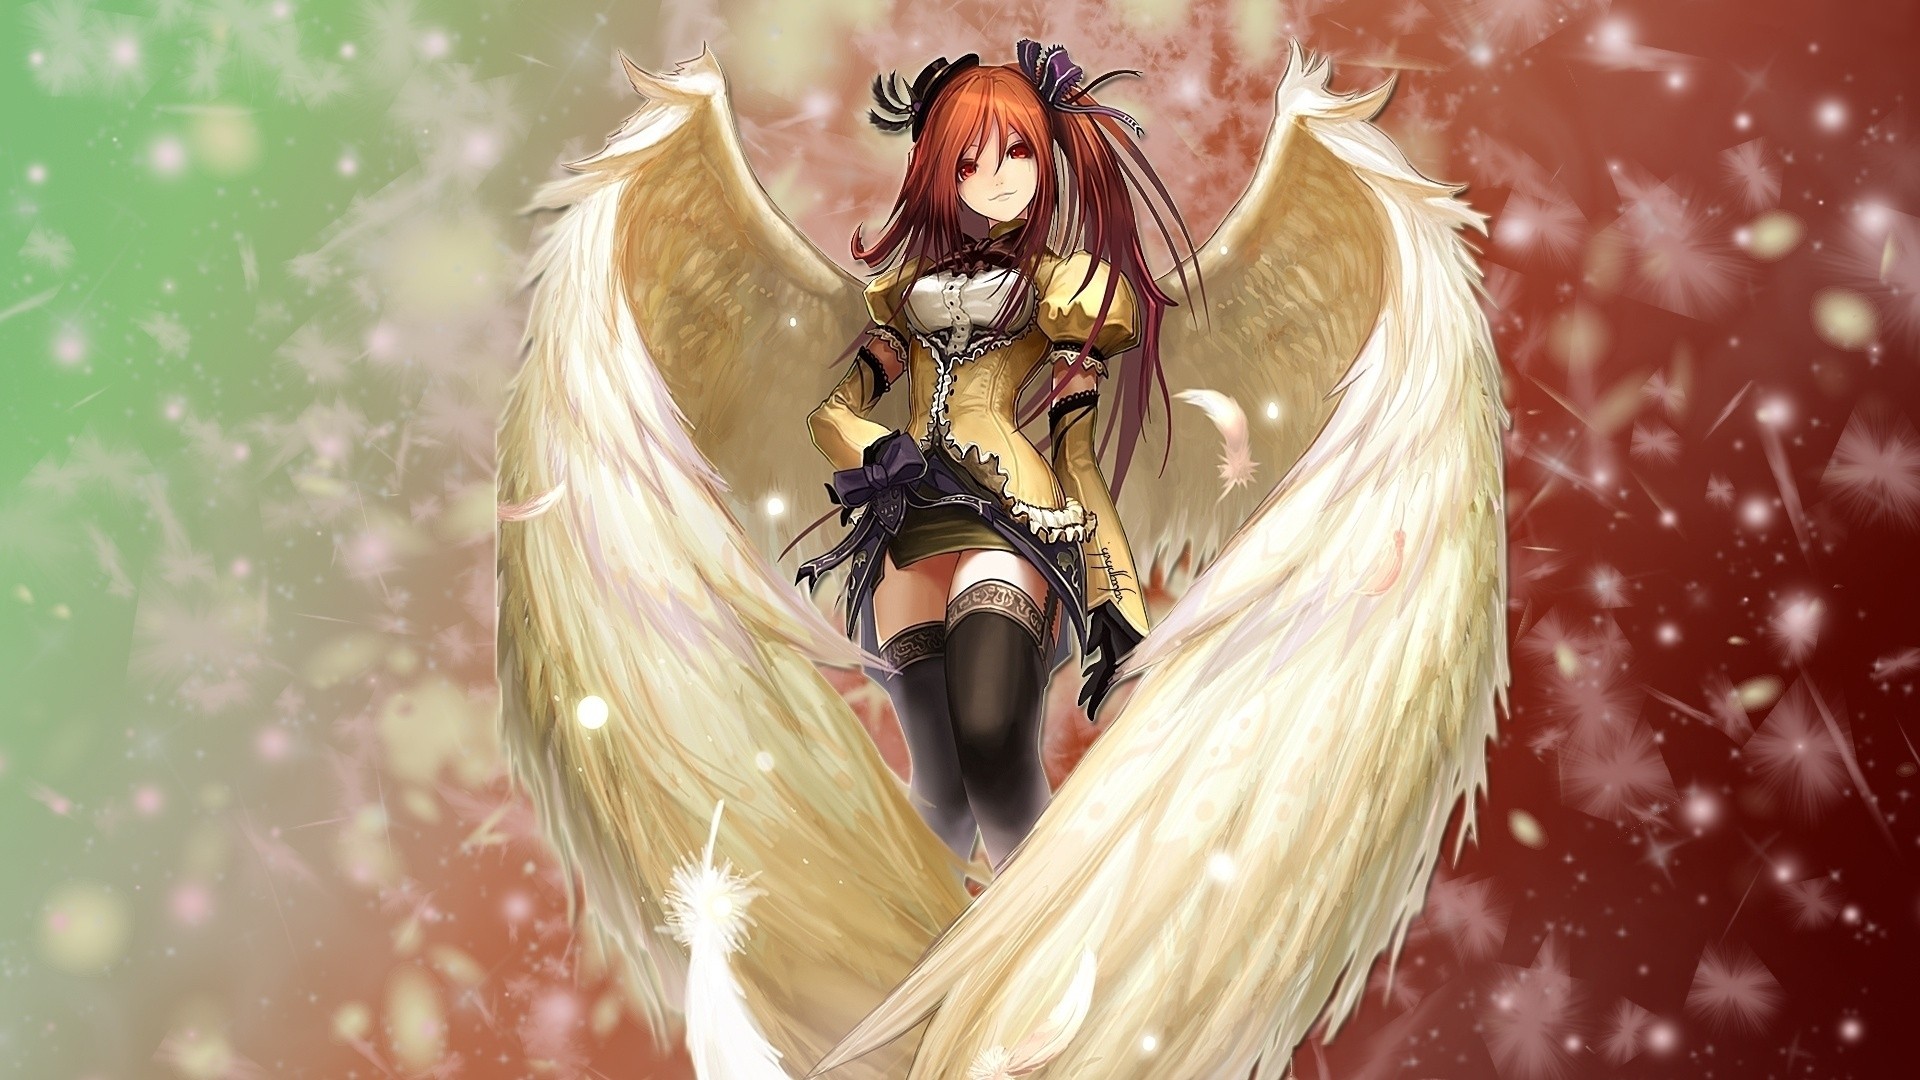 hot anime angel wallpaper sexy girl full hd wallpaper